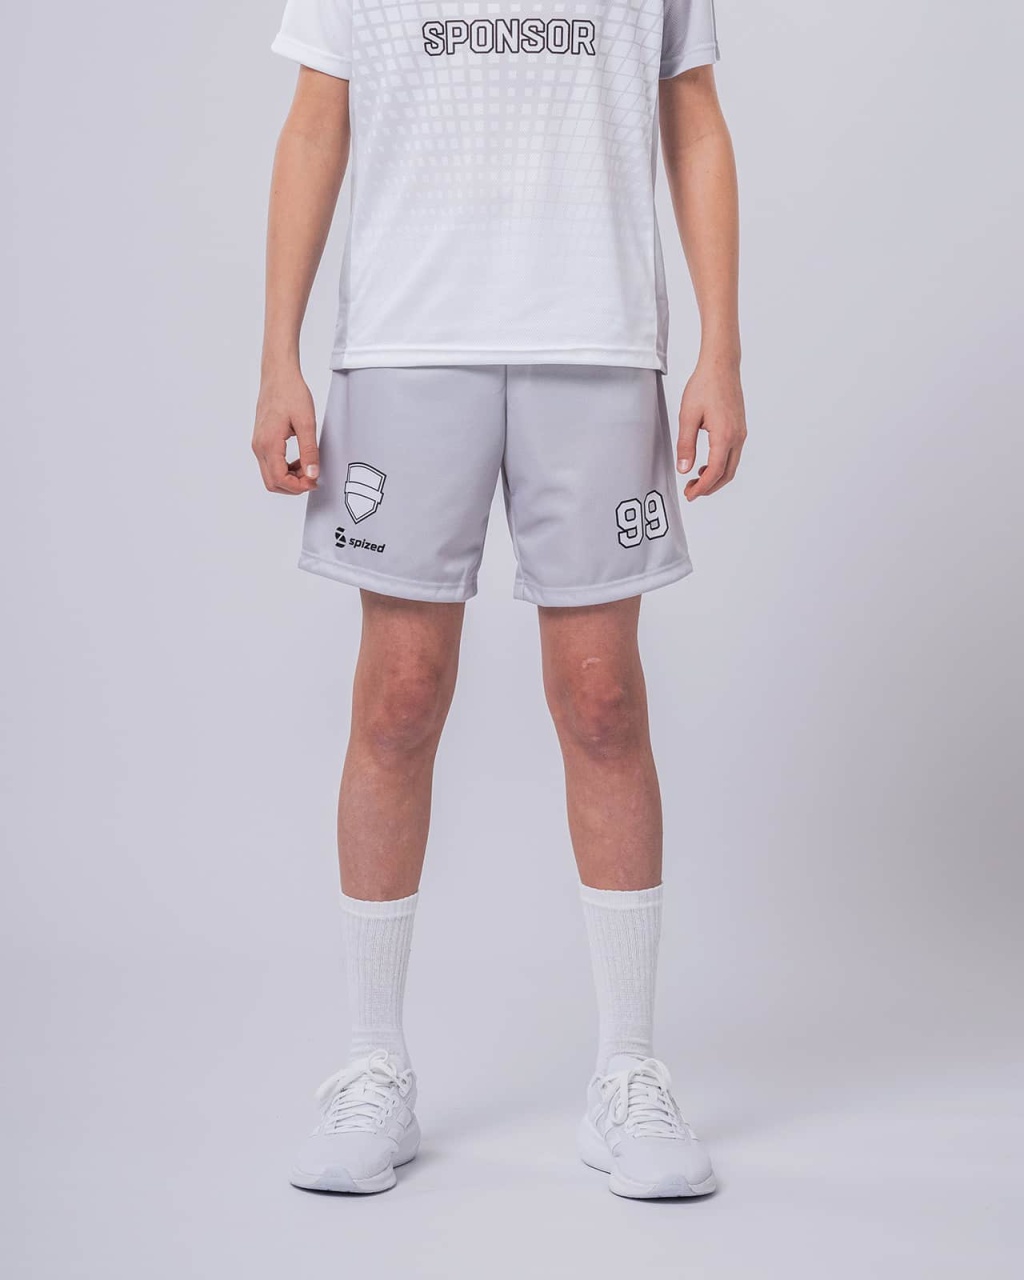 Aarhus children’s handball shorts